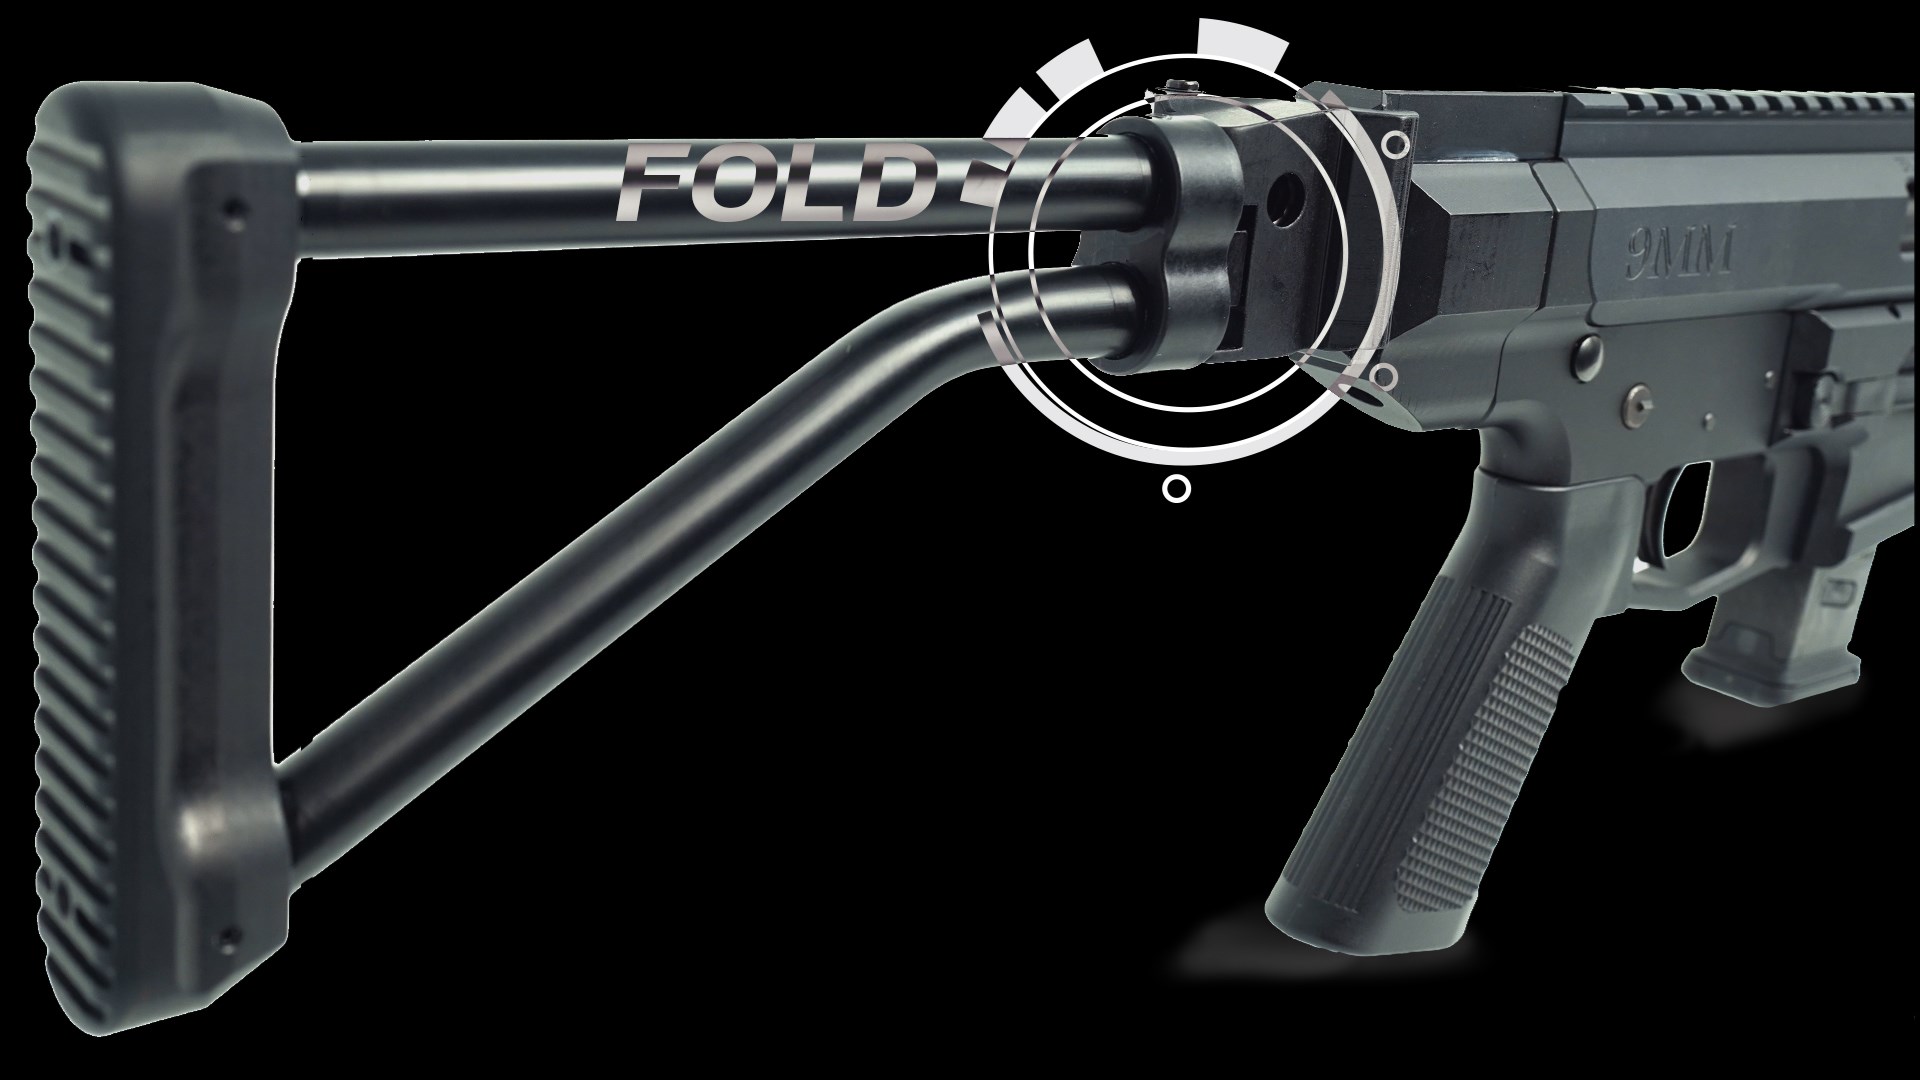 Stock attachment point of Bear Creek Arsenal's bufferless 9mm carbine design.